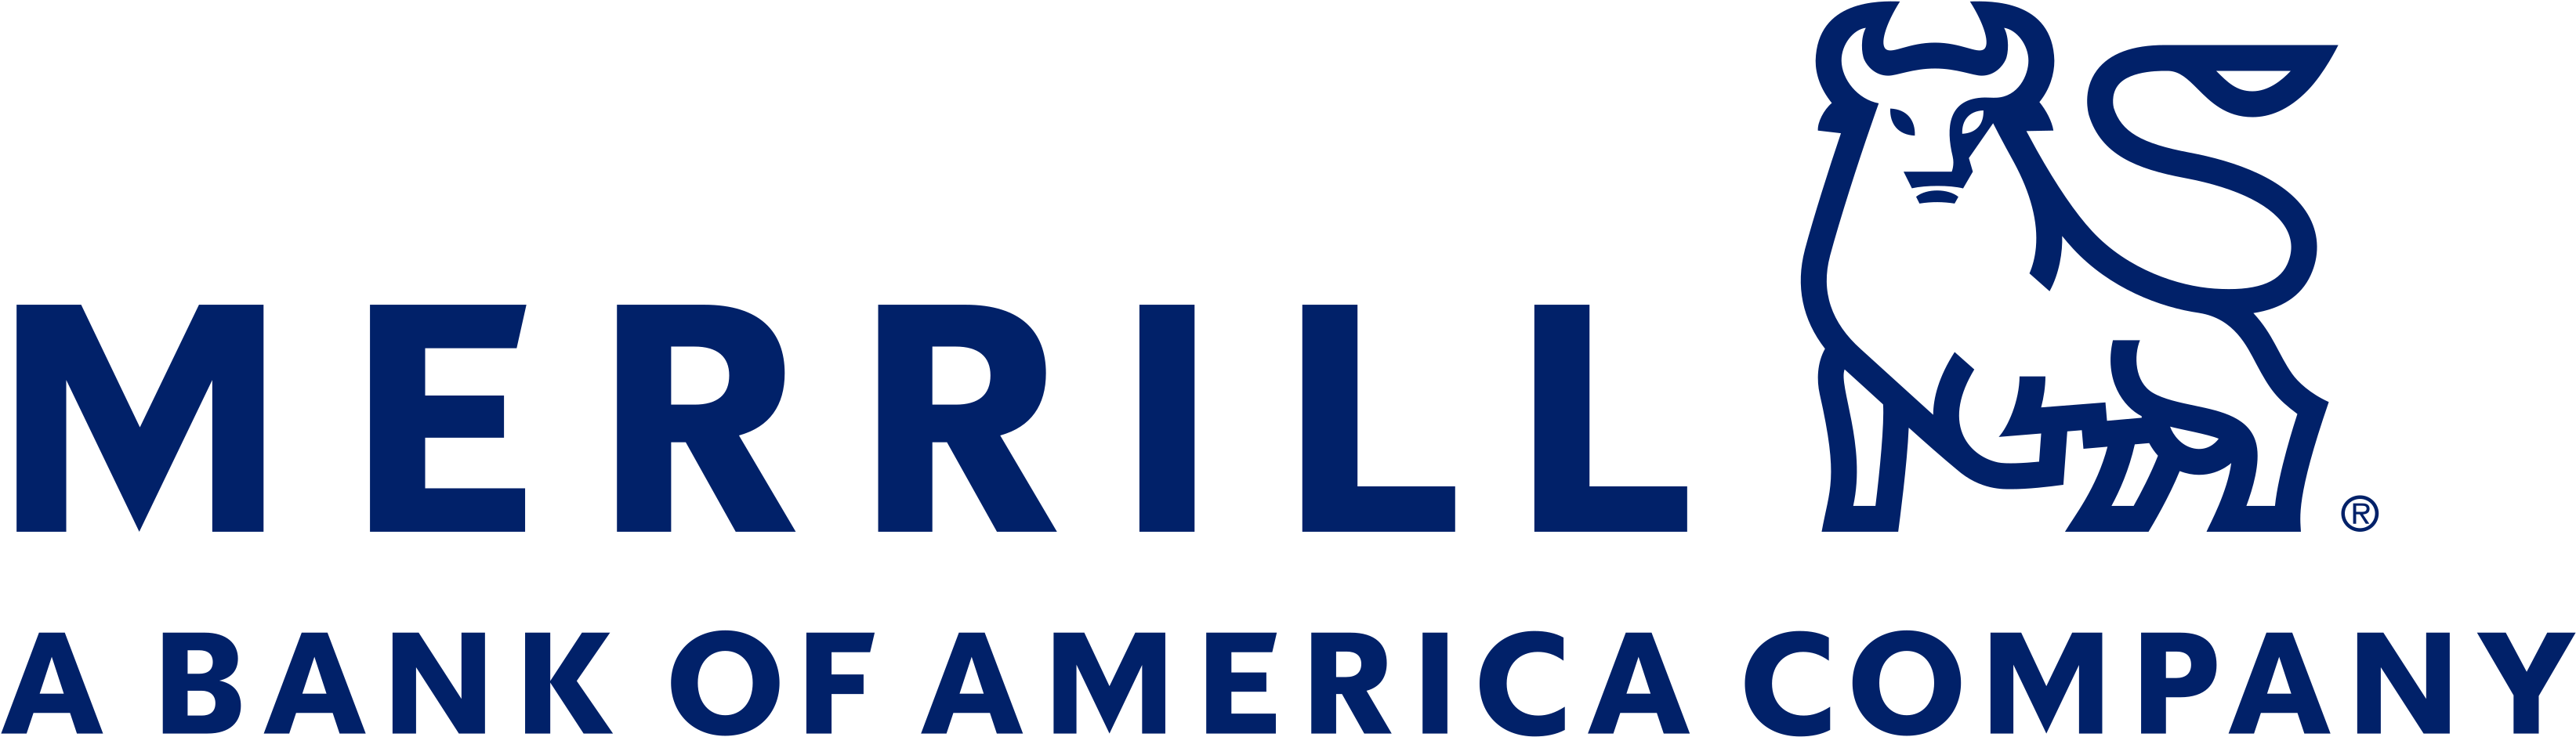 Merrill Bankof America Company Logo PNG